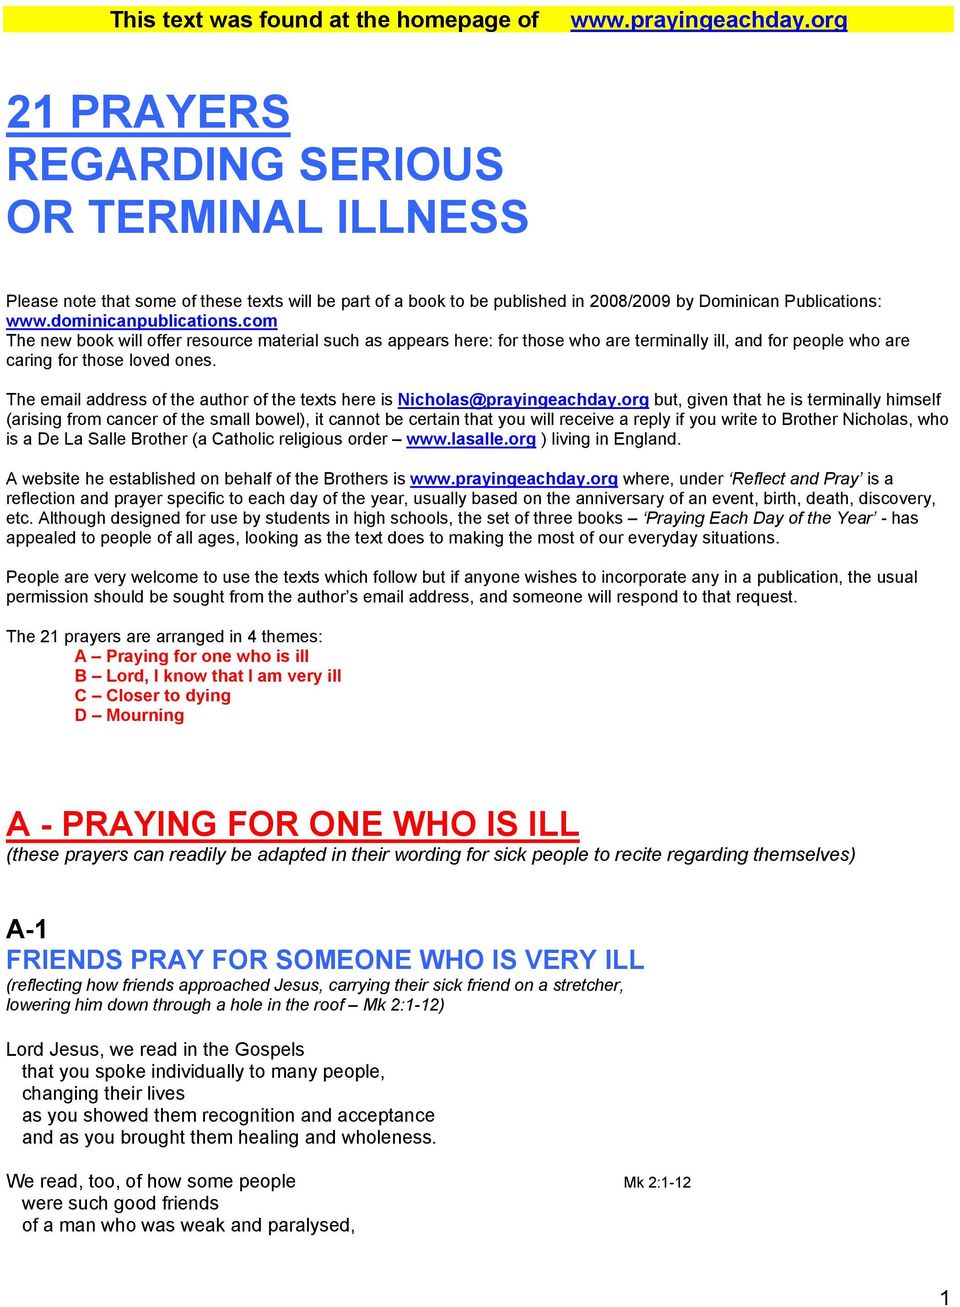 Prayers for the terminally ill